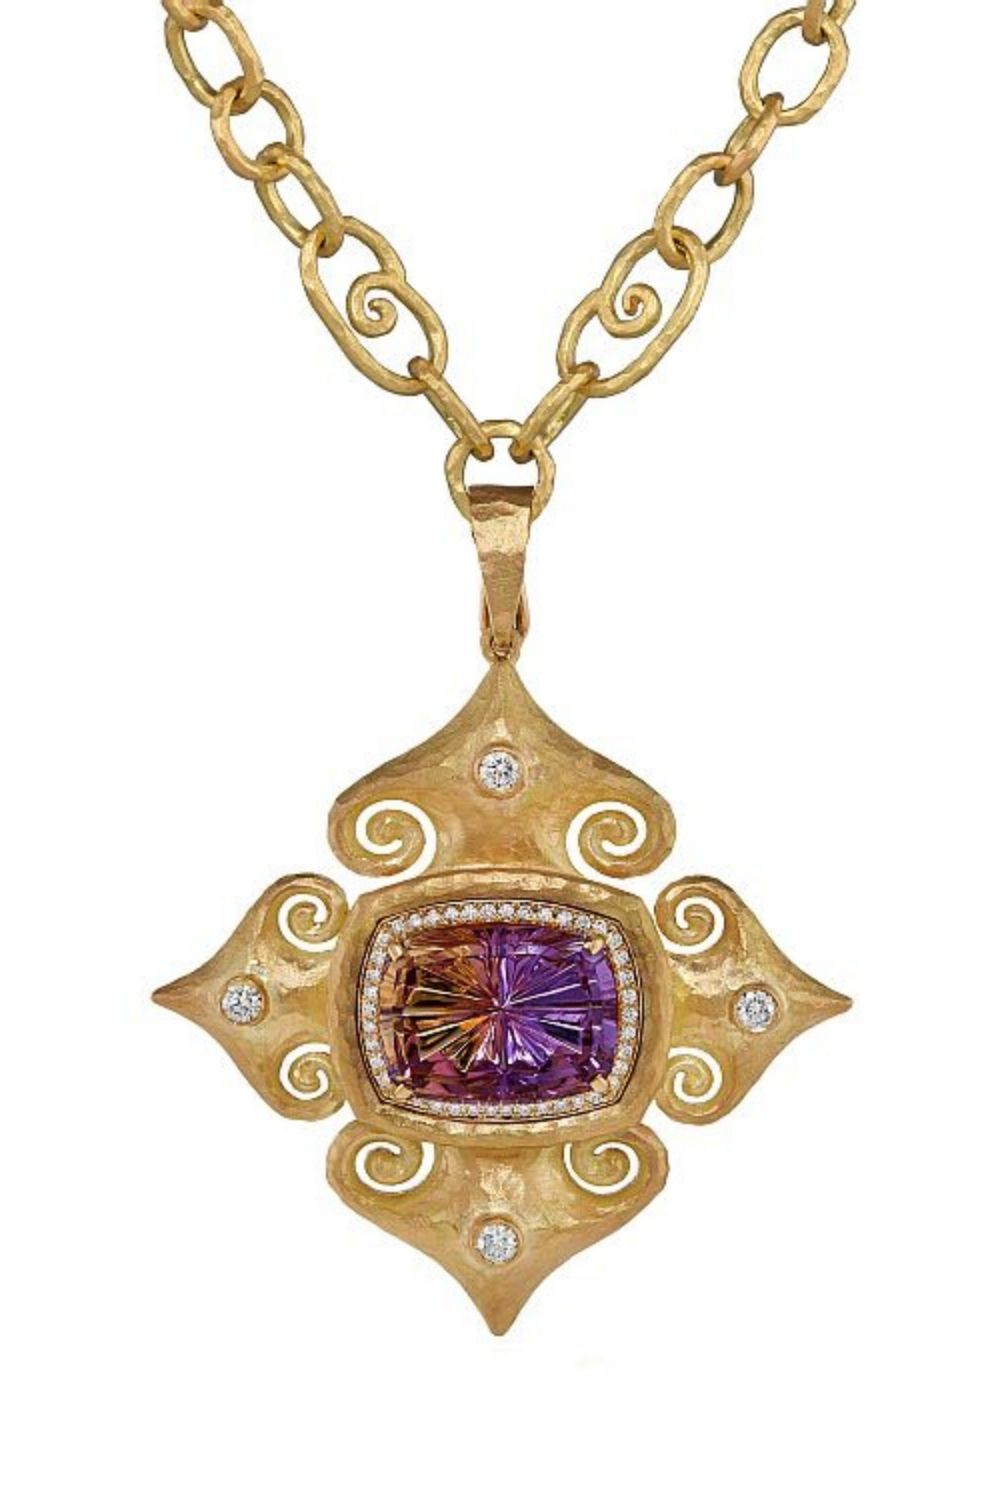 Pamela Froman Fine Jewelry 18-karat yellow gold stylized Maltese Cross pendant featuring a Bolivian John Dyer Starbrite-cut 9.85-carat ametrine, with diamonds. 